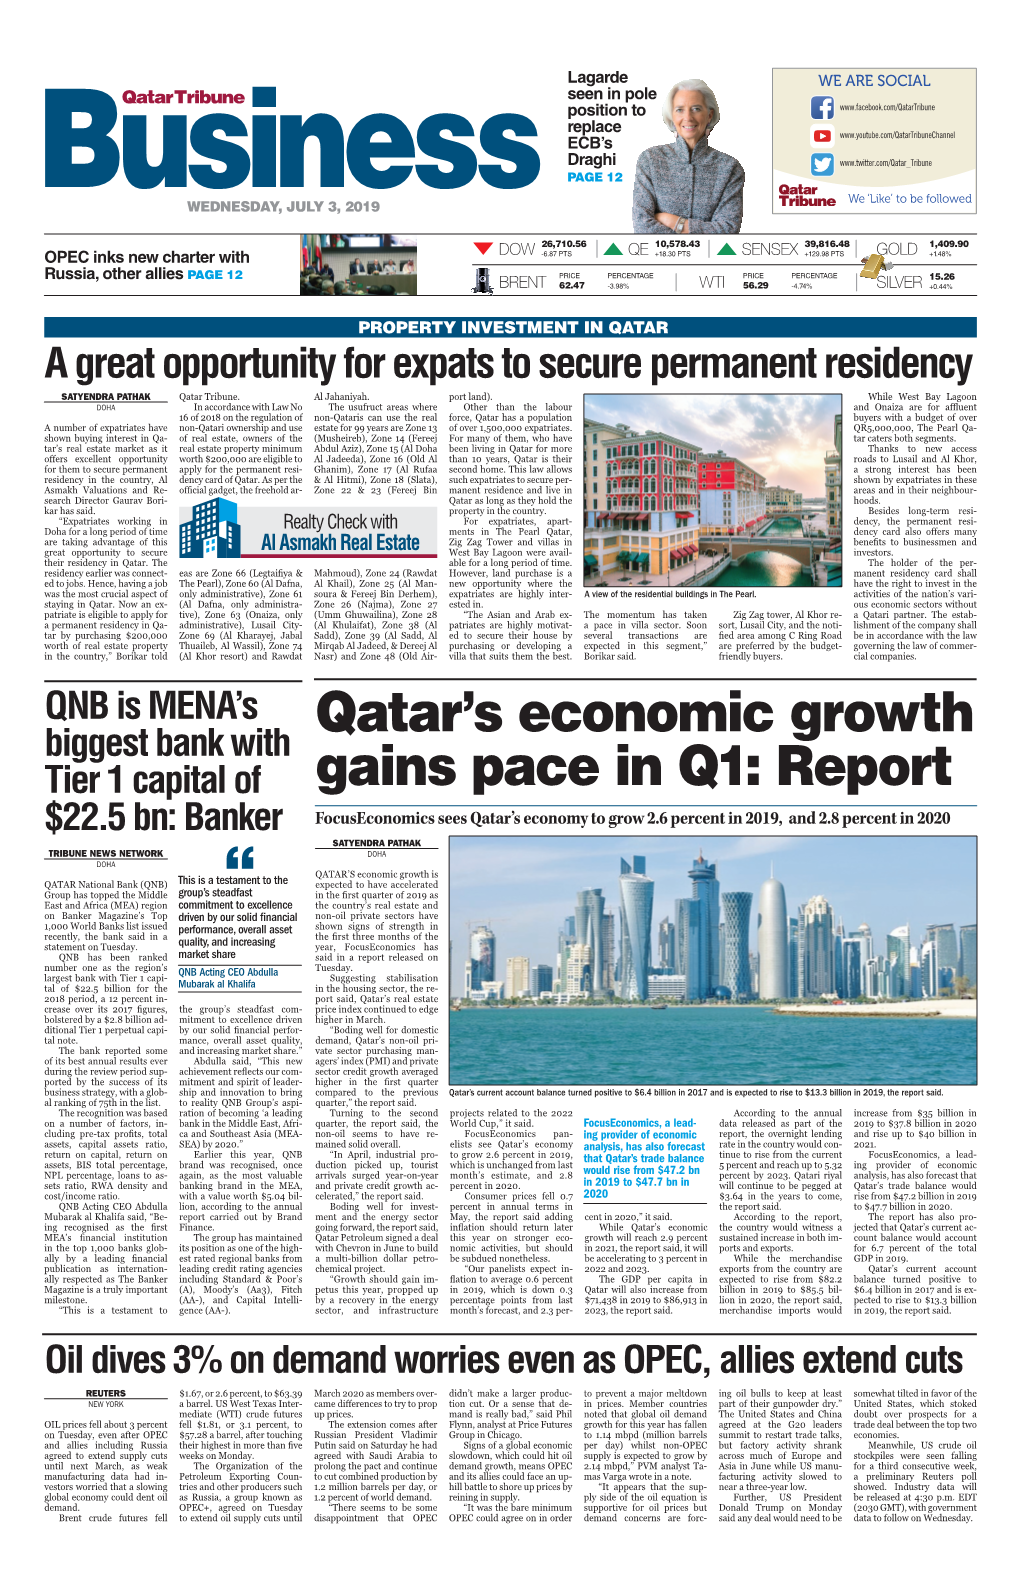 Qatar's Economic Growth Gains Pace in Q1